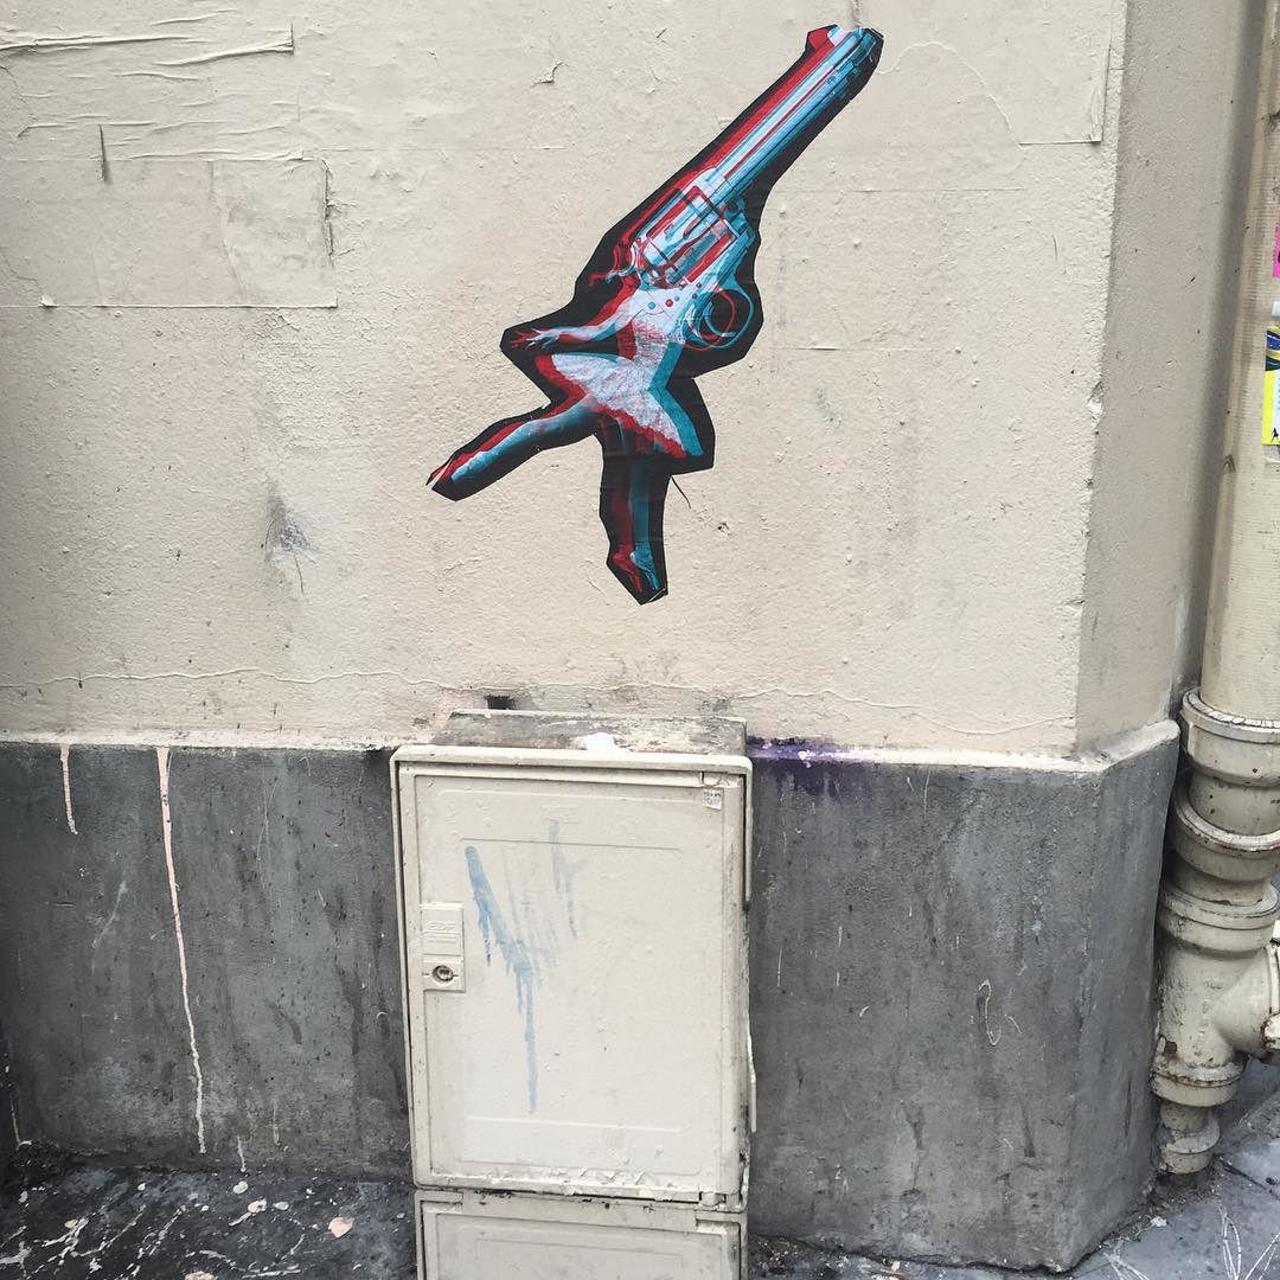 circumjacent_fr: #Paris #graffiti photo by wafaawifi http://ift.tt/1LvAacw #StreetArt http://t.co/NDpWOlb9gF